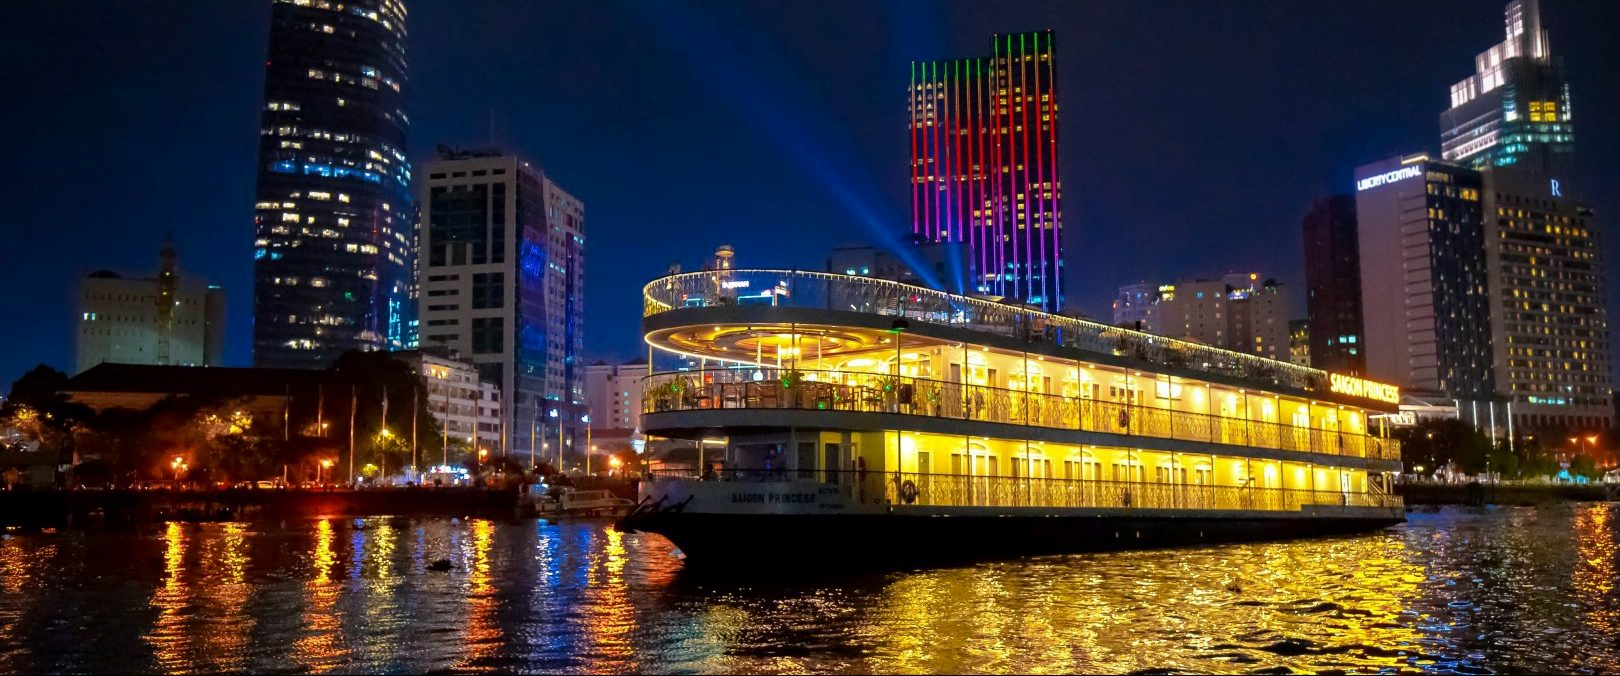 5-star cruise in Saigon by night